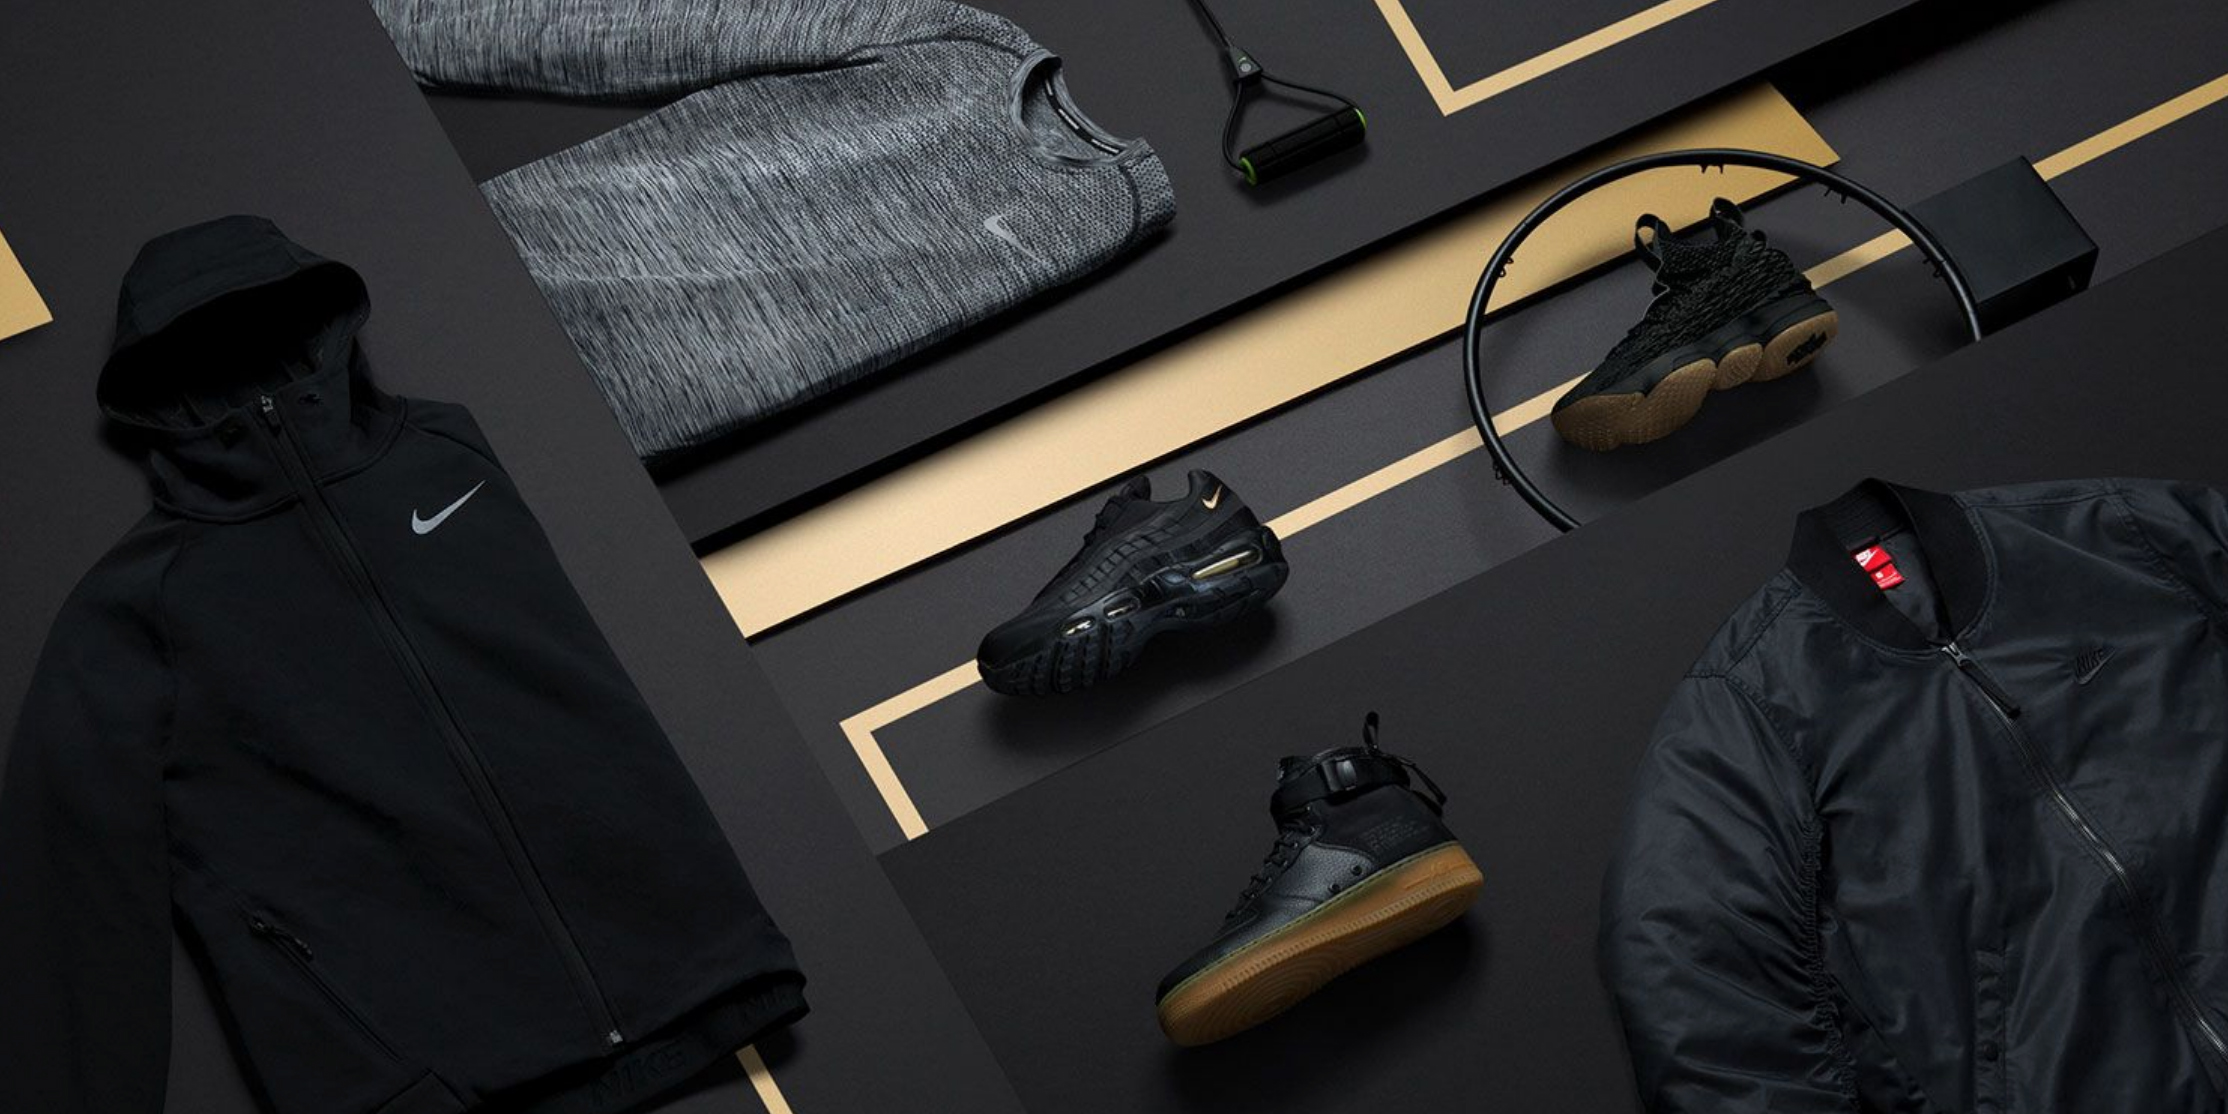 Nike S Cyber Monday Sale Takes An Extra 25 Off Tech Fleece Jordan Dri Fit More 9to5toys